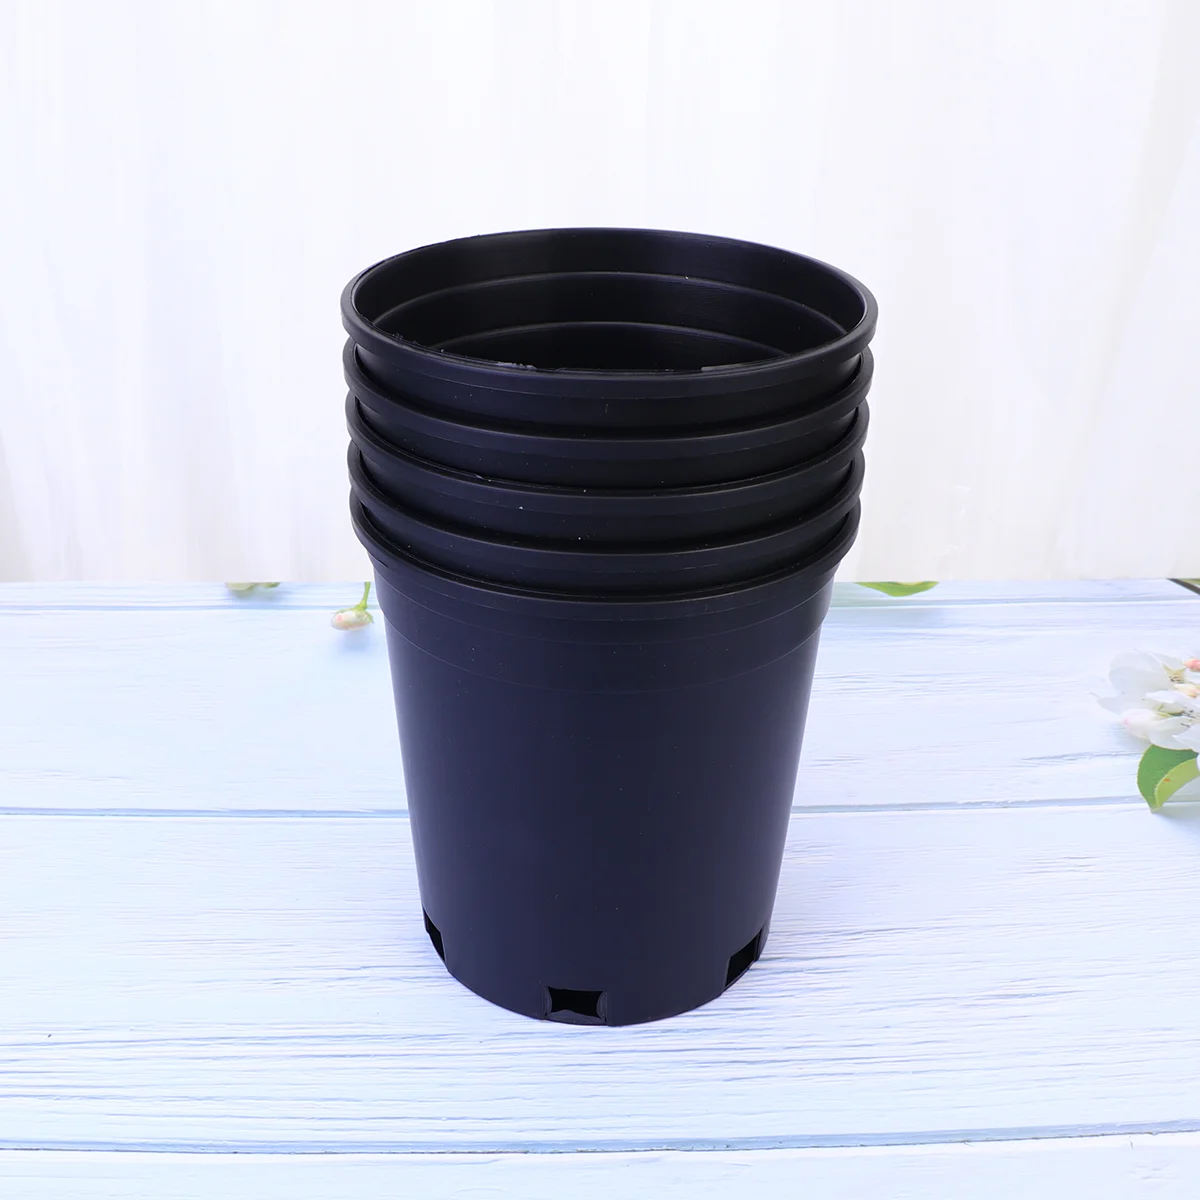 

5pcs Flower Nursery Pot Round Pot Garden Starter Pots Grow Vase Container ( Black 1 Gallon Capacity ) Seeds for planting